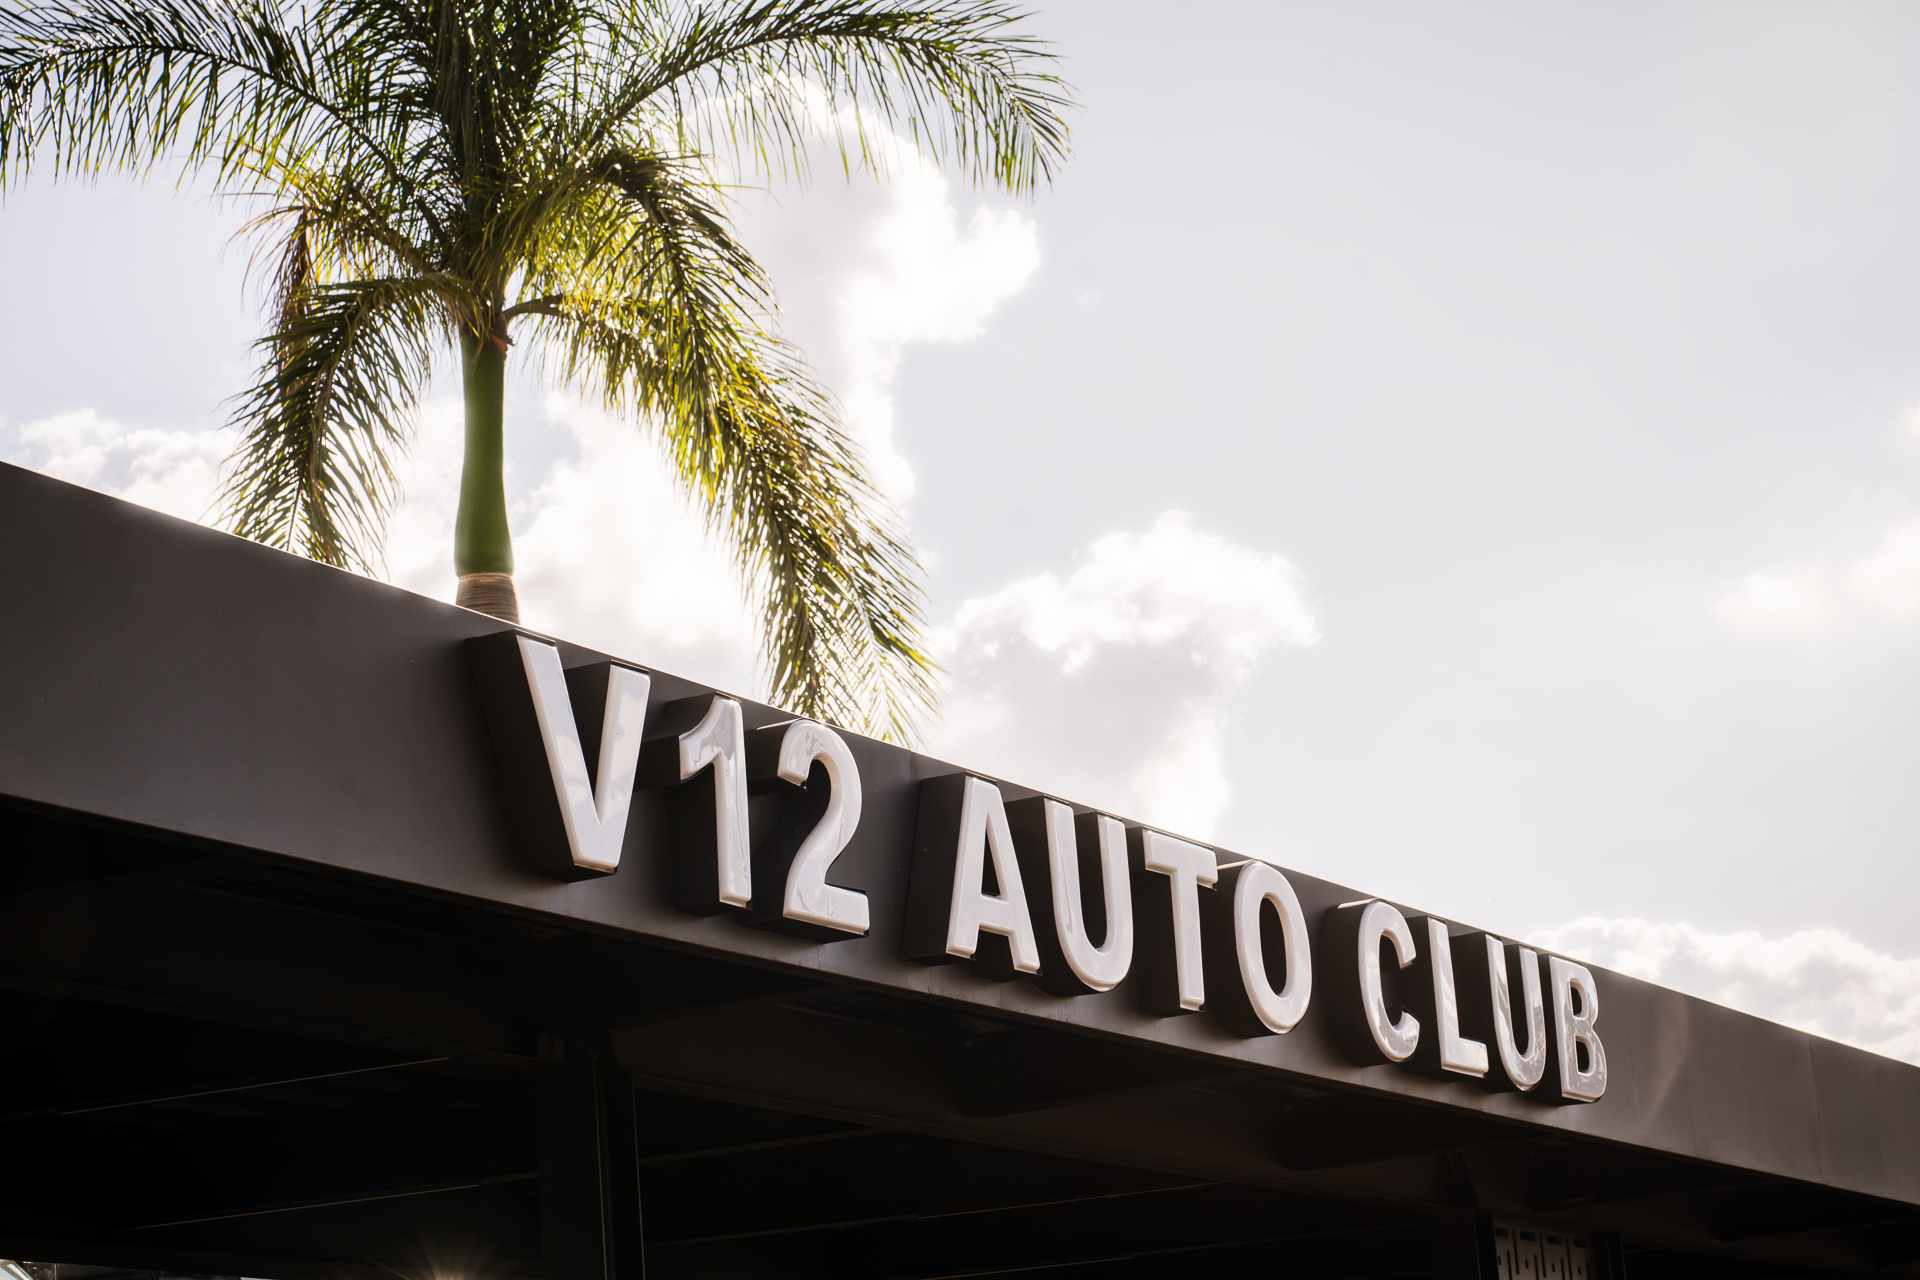 V12 Auto Club